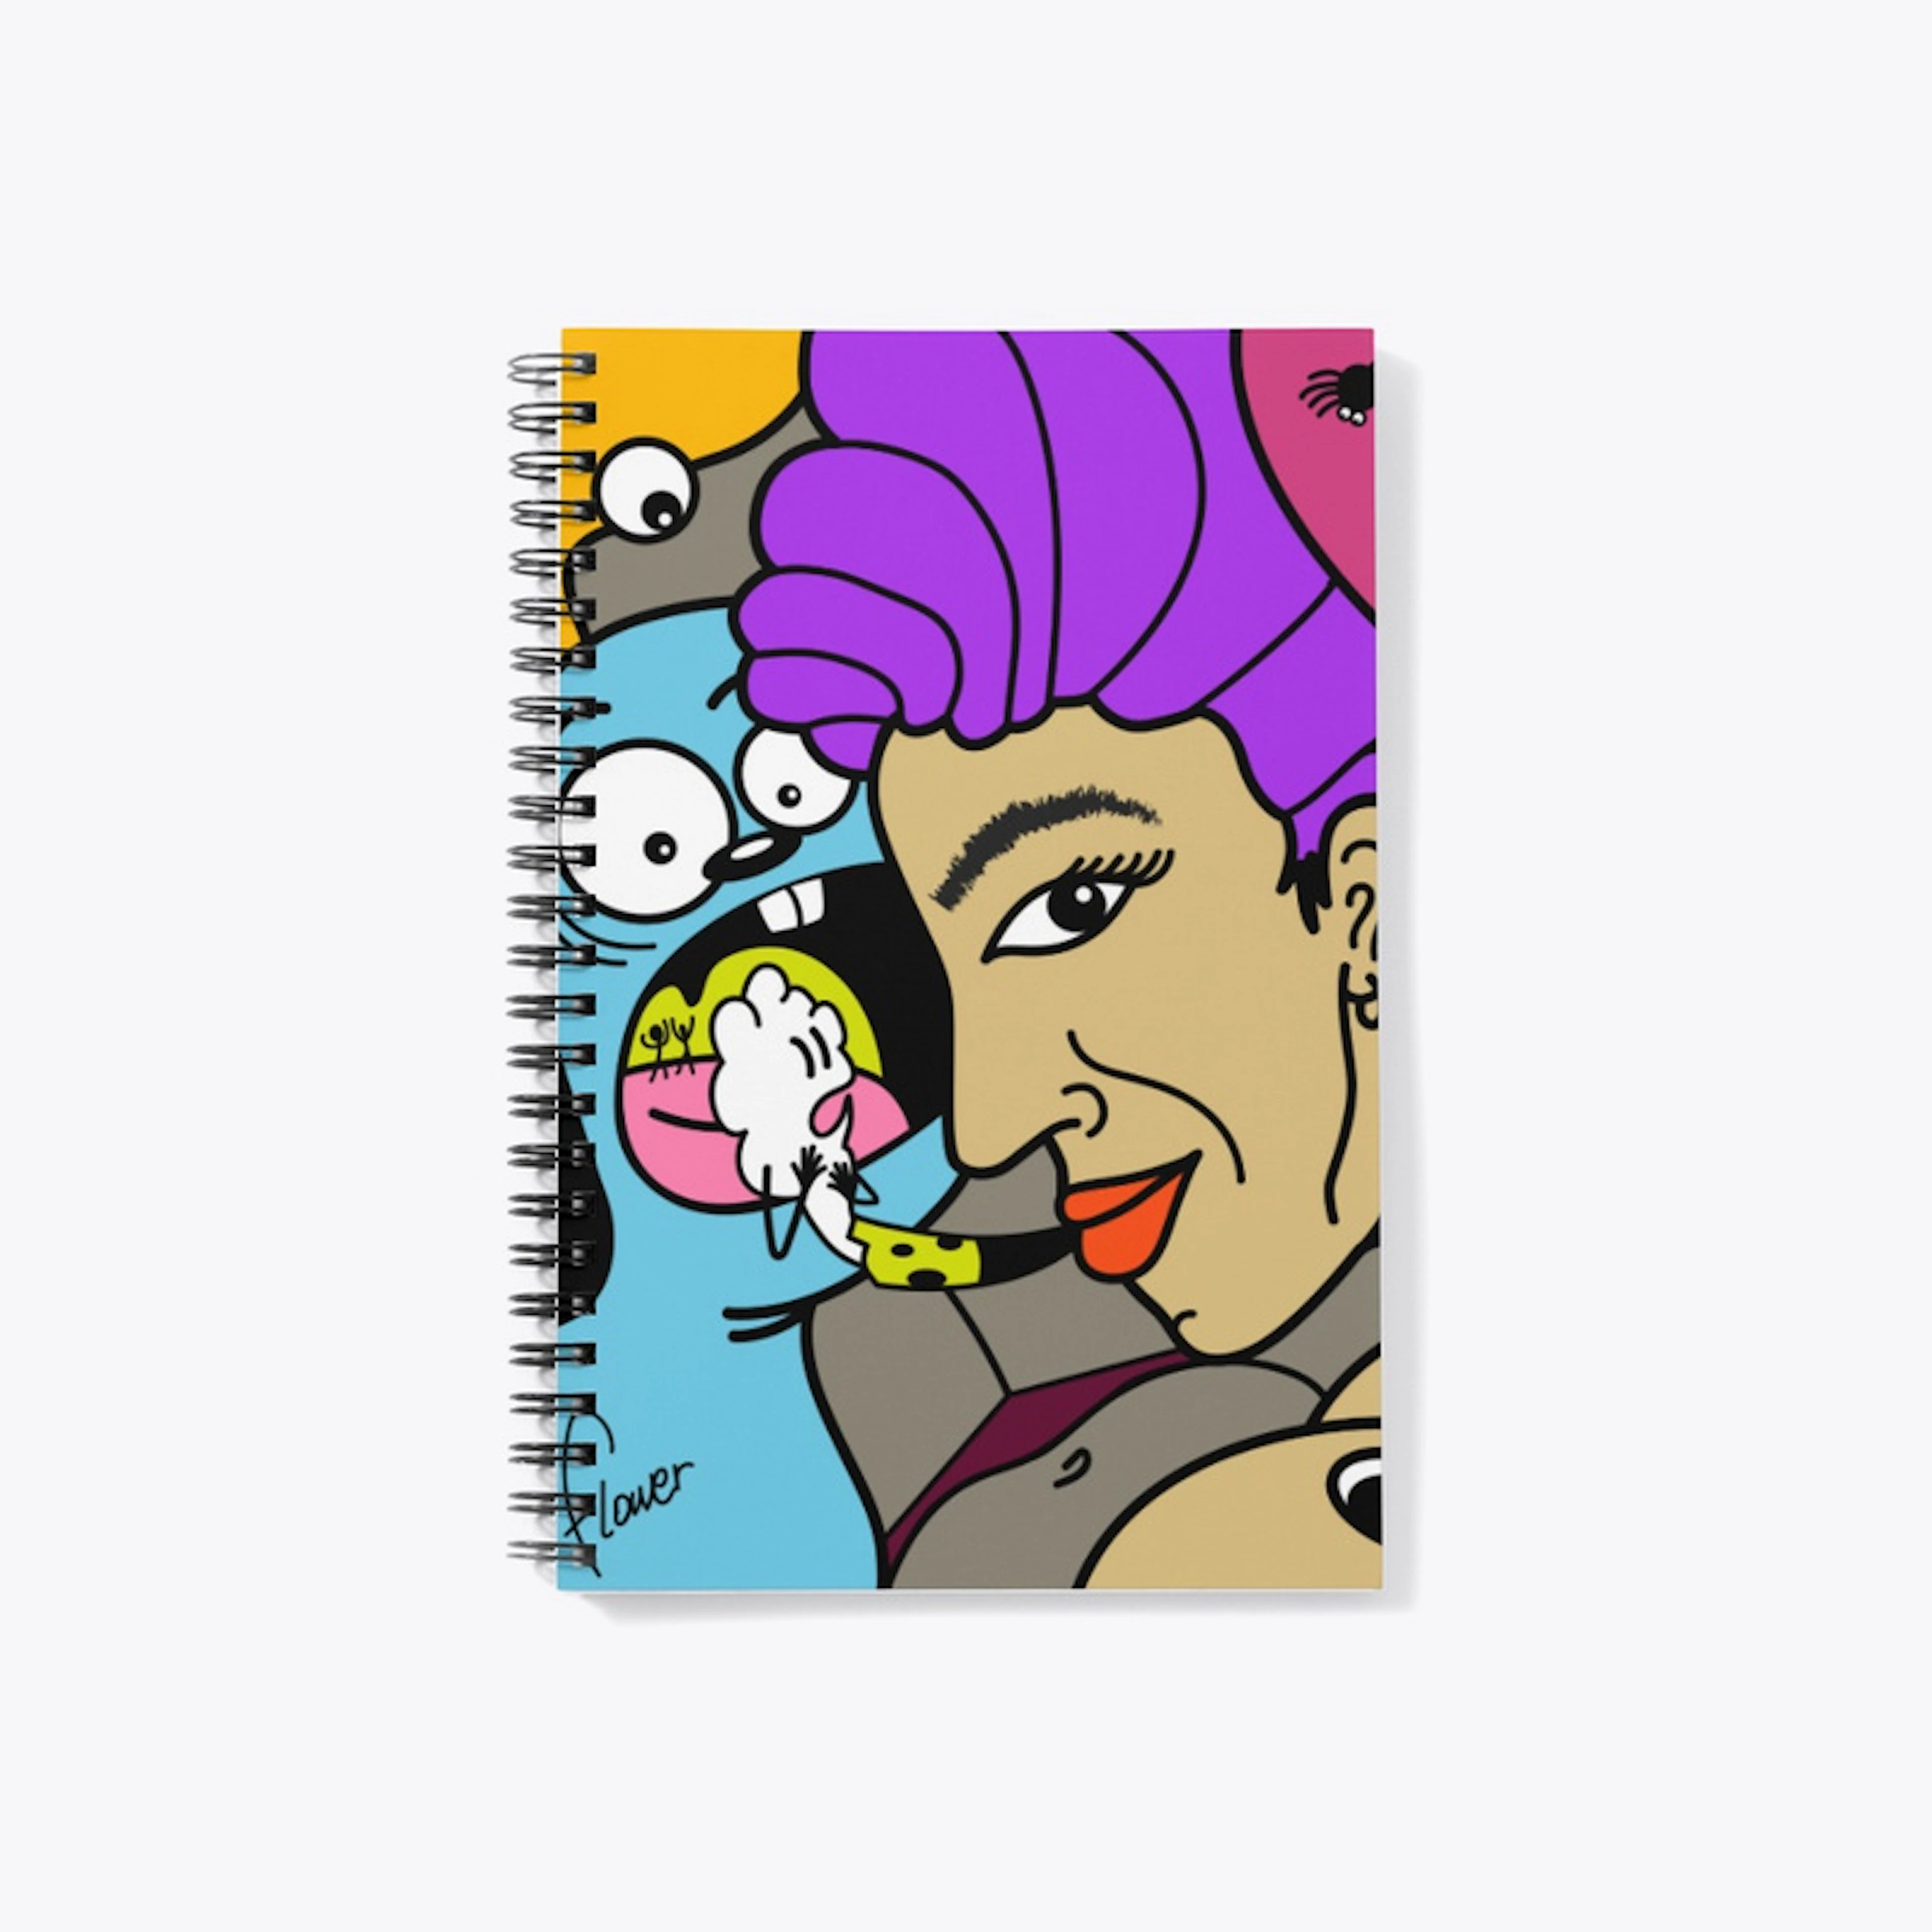 Binario Spiral Notebook